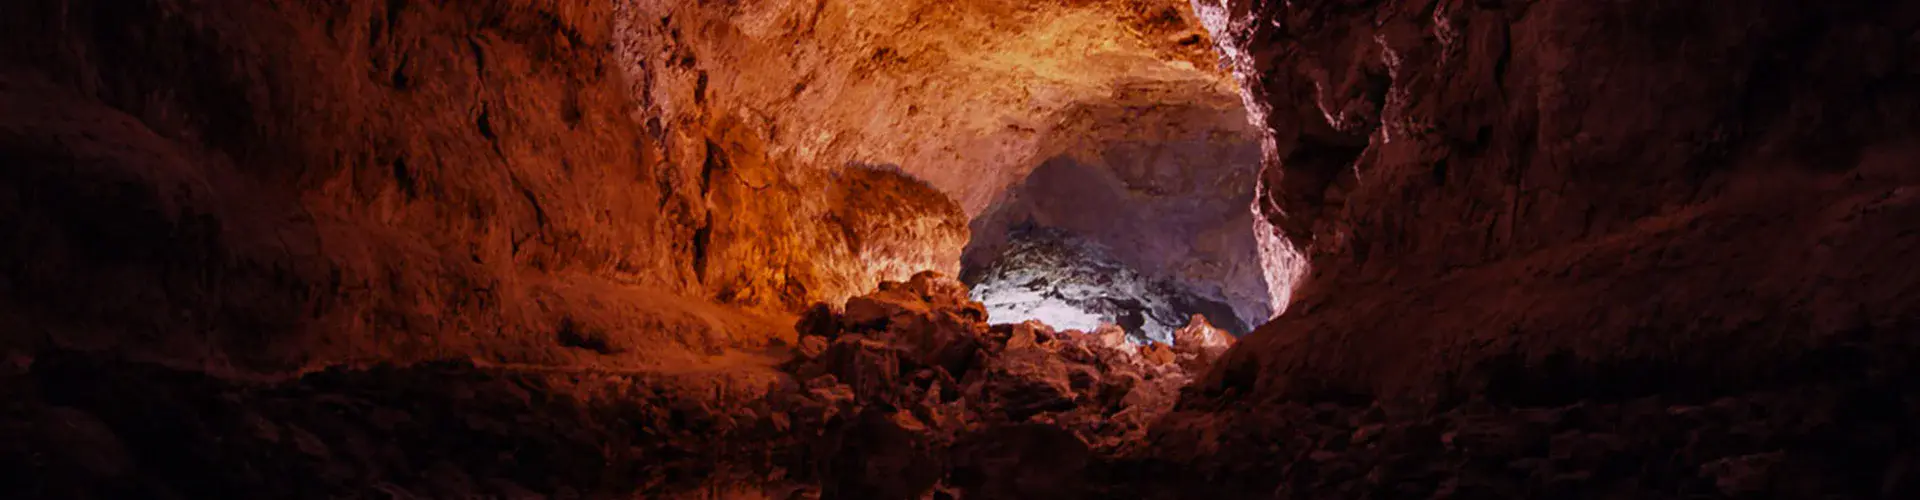 Cueva de los Verdes (Credit: Marta Umbert Ceresuela, distributed via imaggeo.egu.eu)